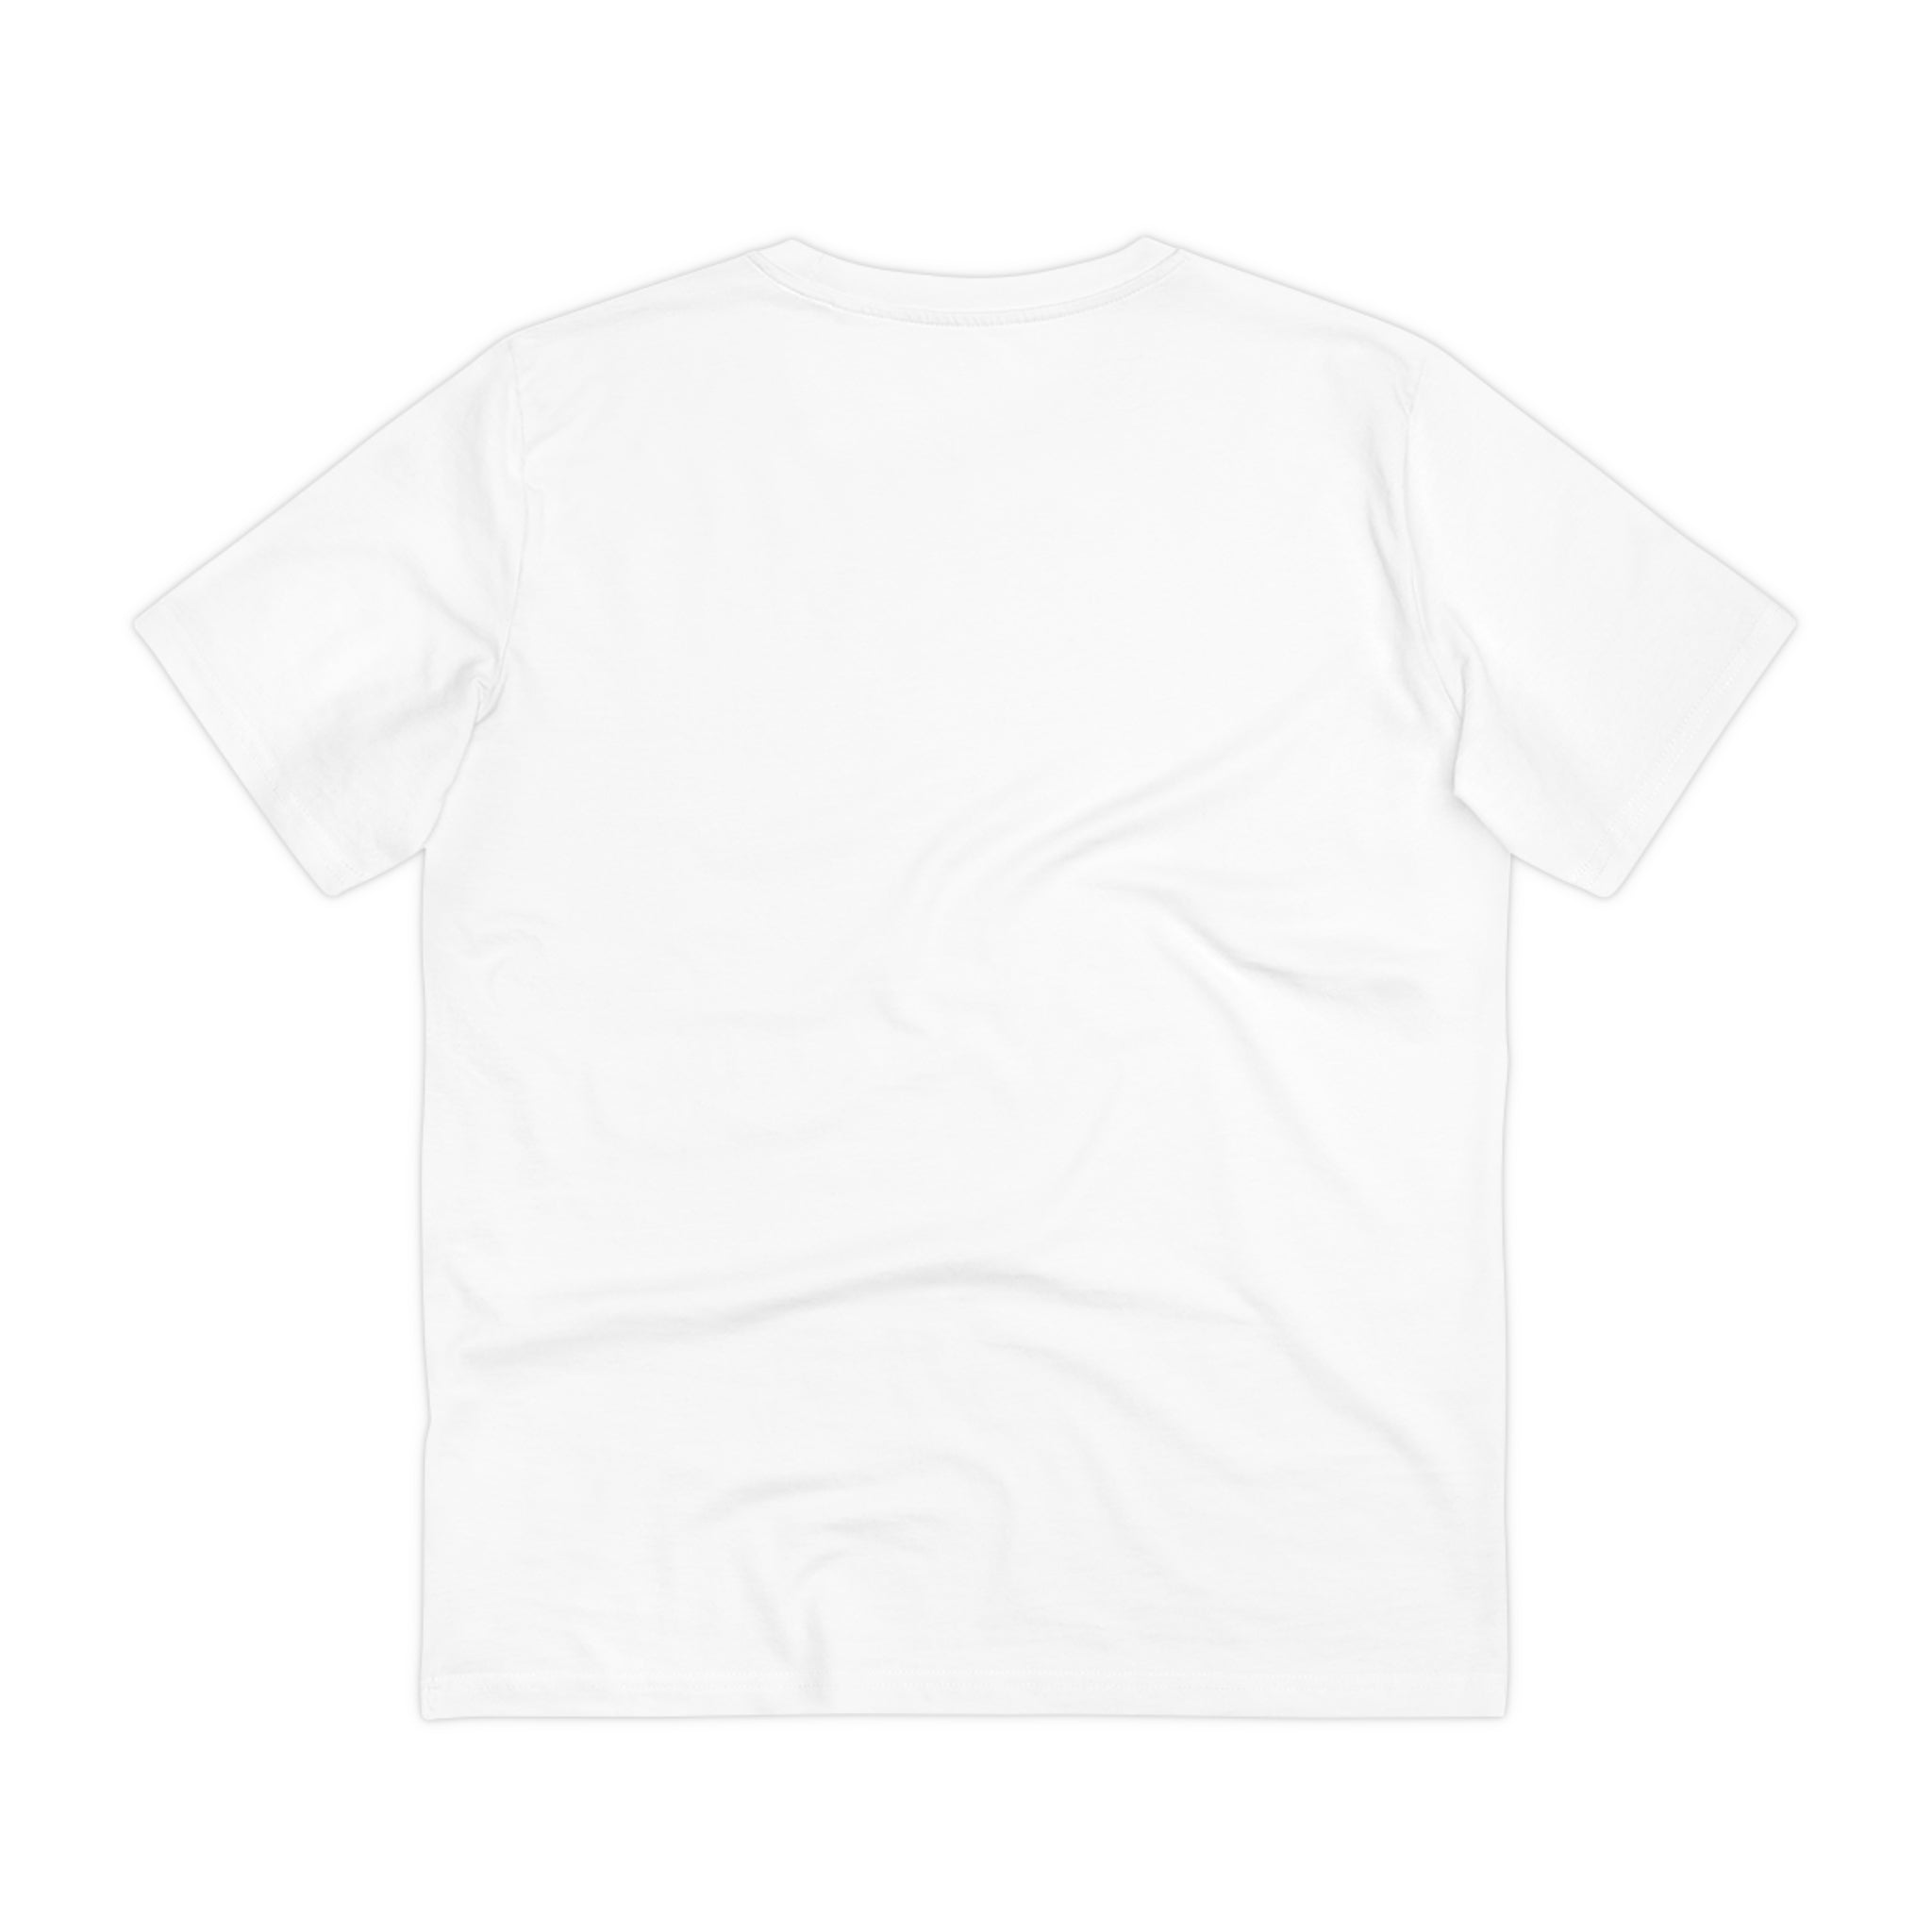 Justabarth T-shirt #4